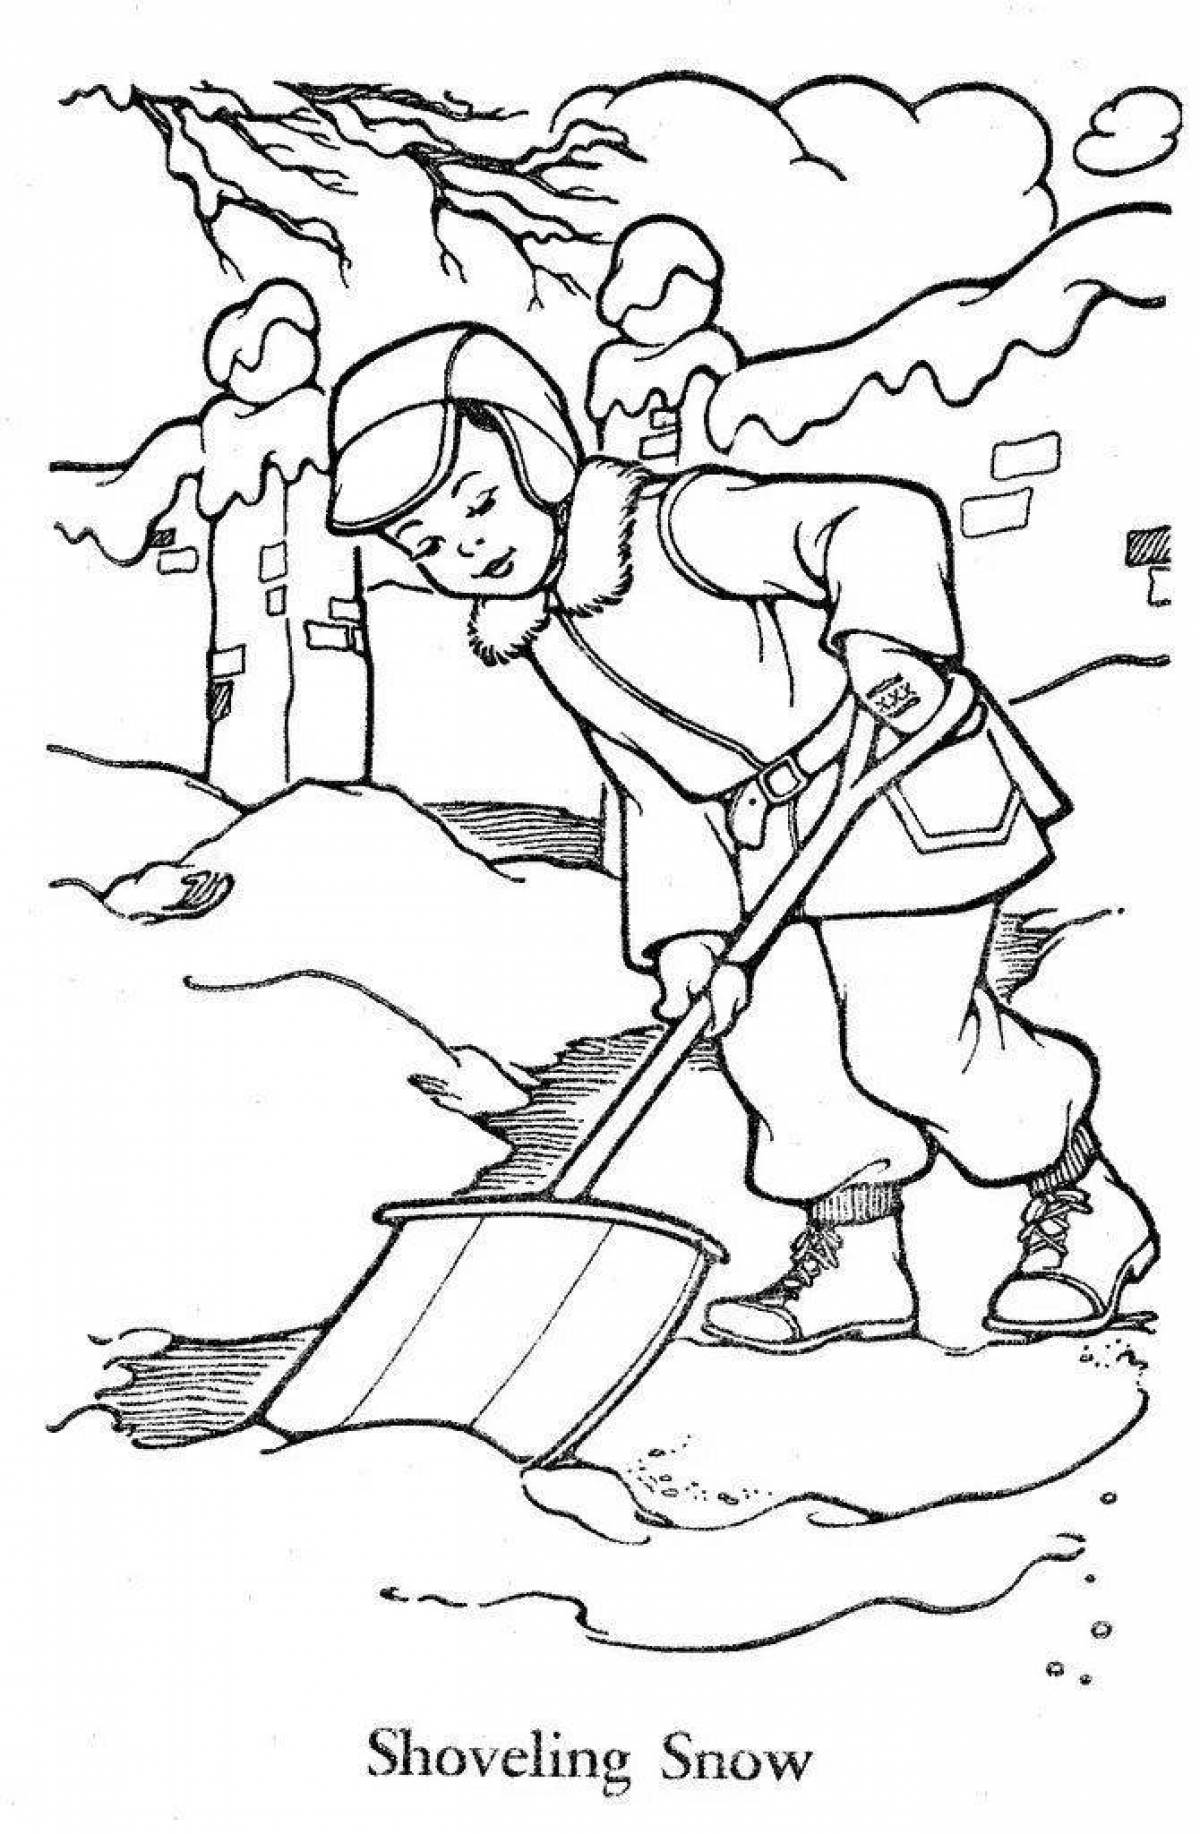 Human labor in winter #2